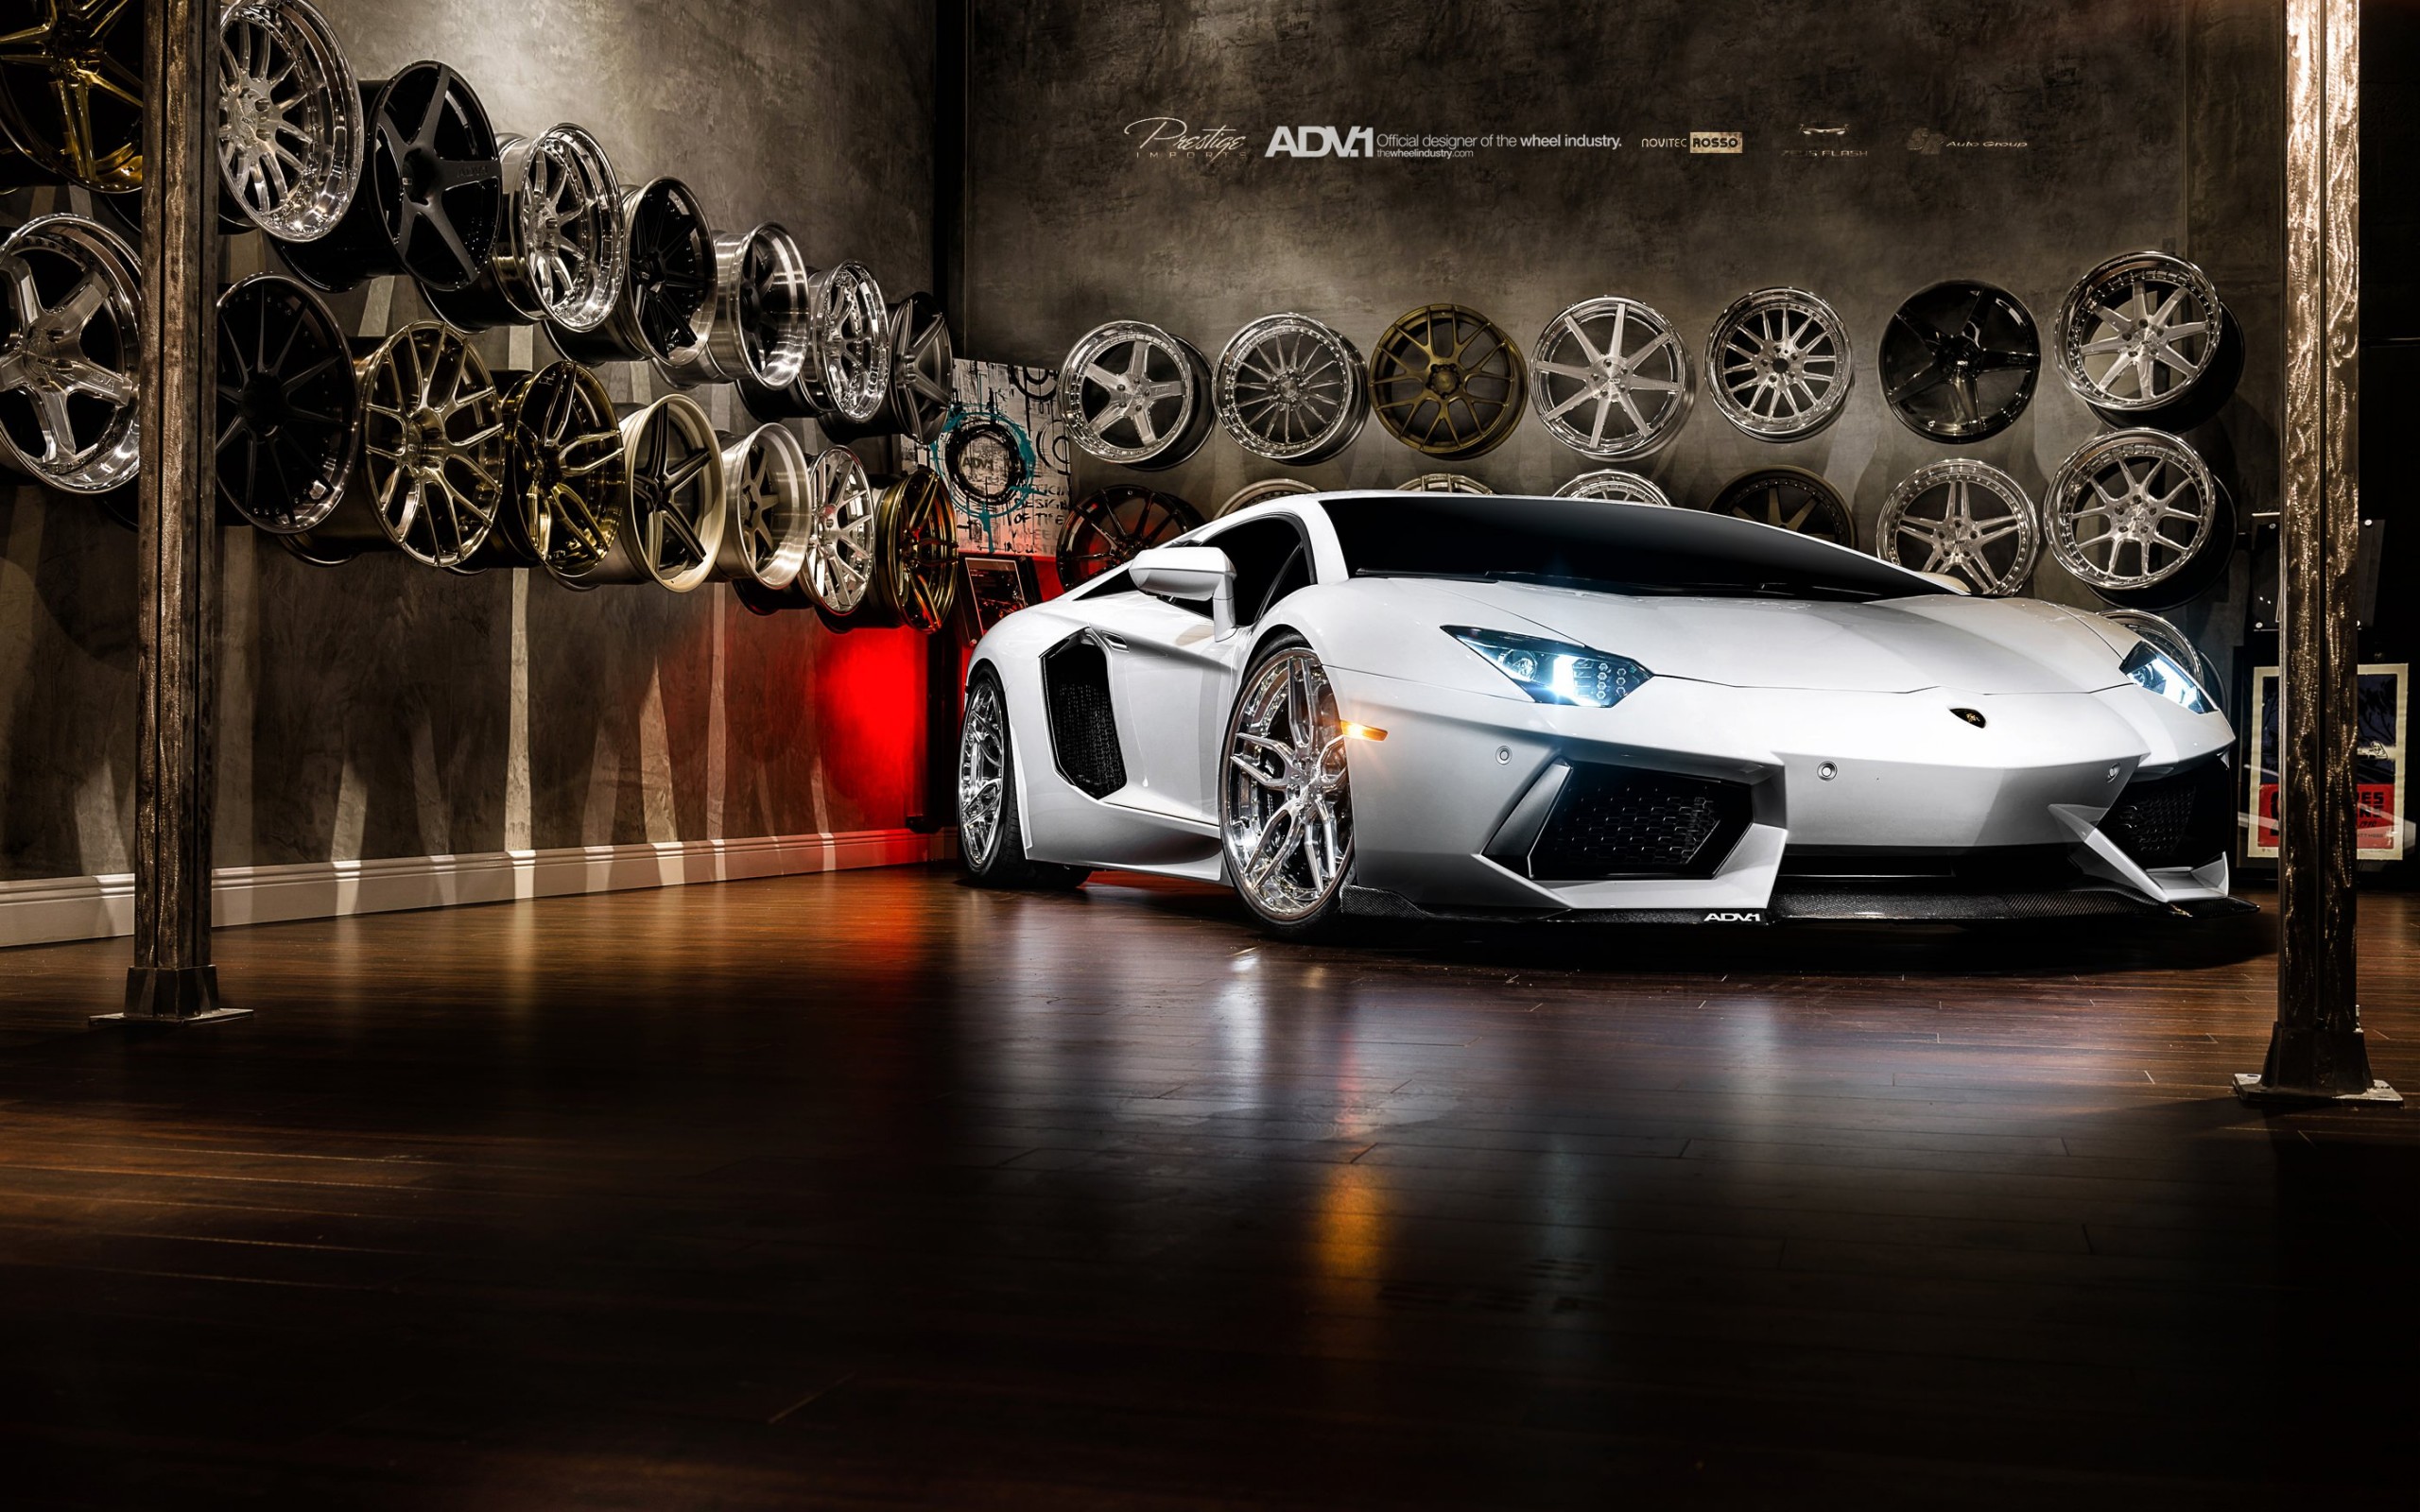 Lamborghini Aventador On ADV.1 Wheels Wallpaper for Desktop 2560x1600